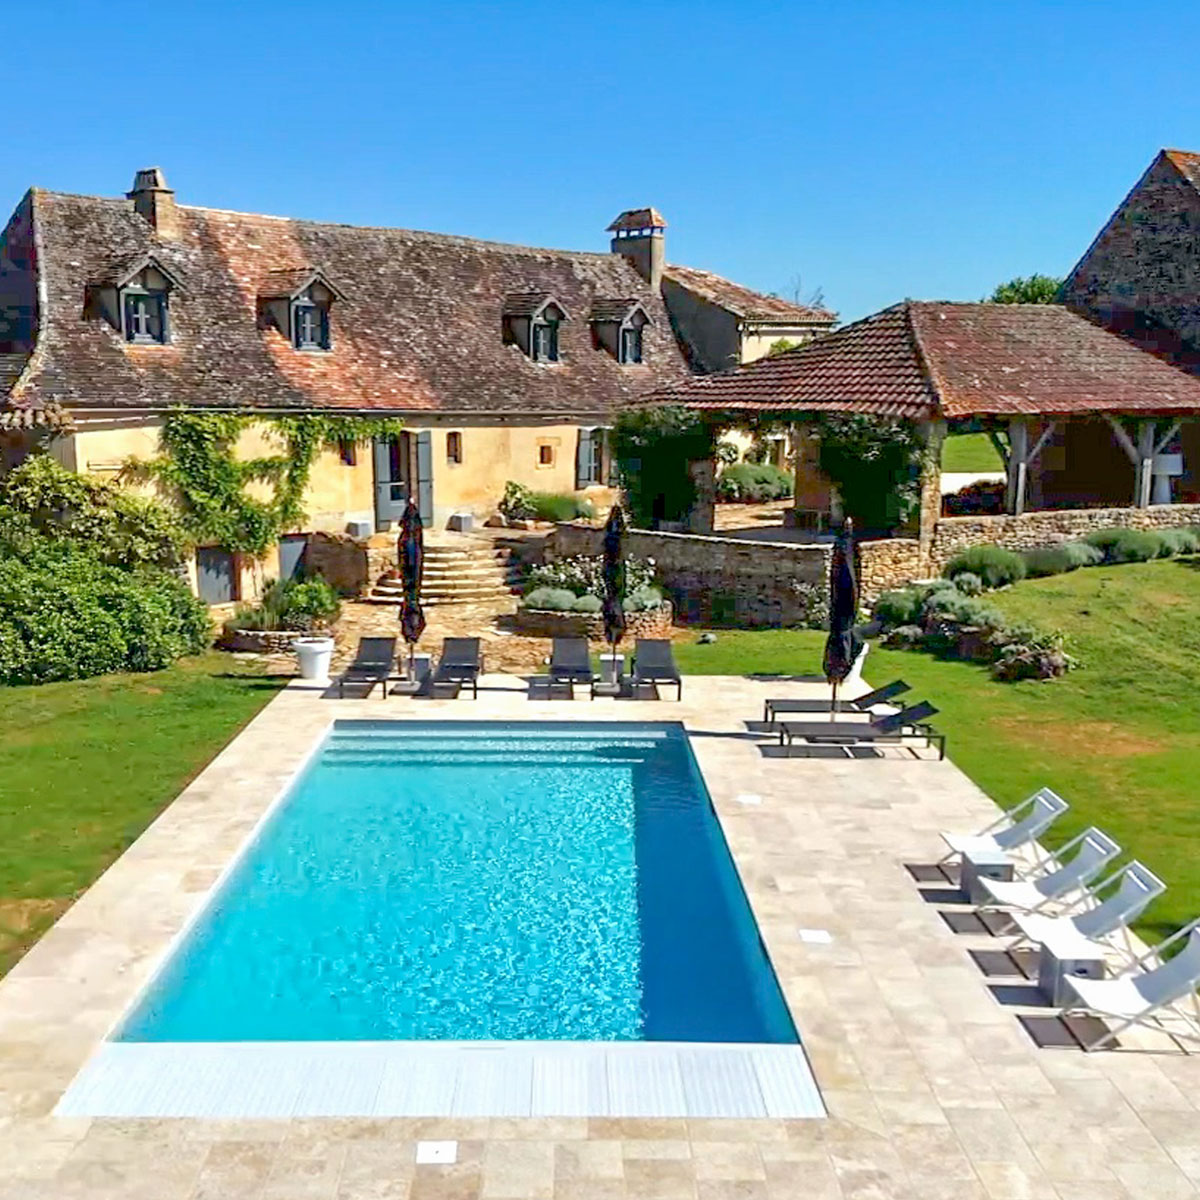 Le Mas holiday villa Dordogne sw France